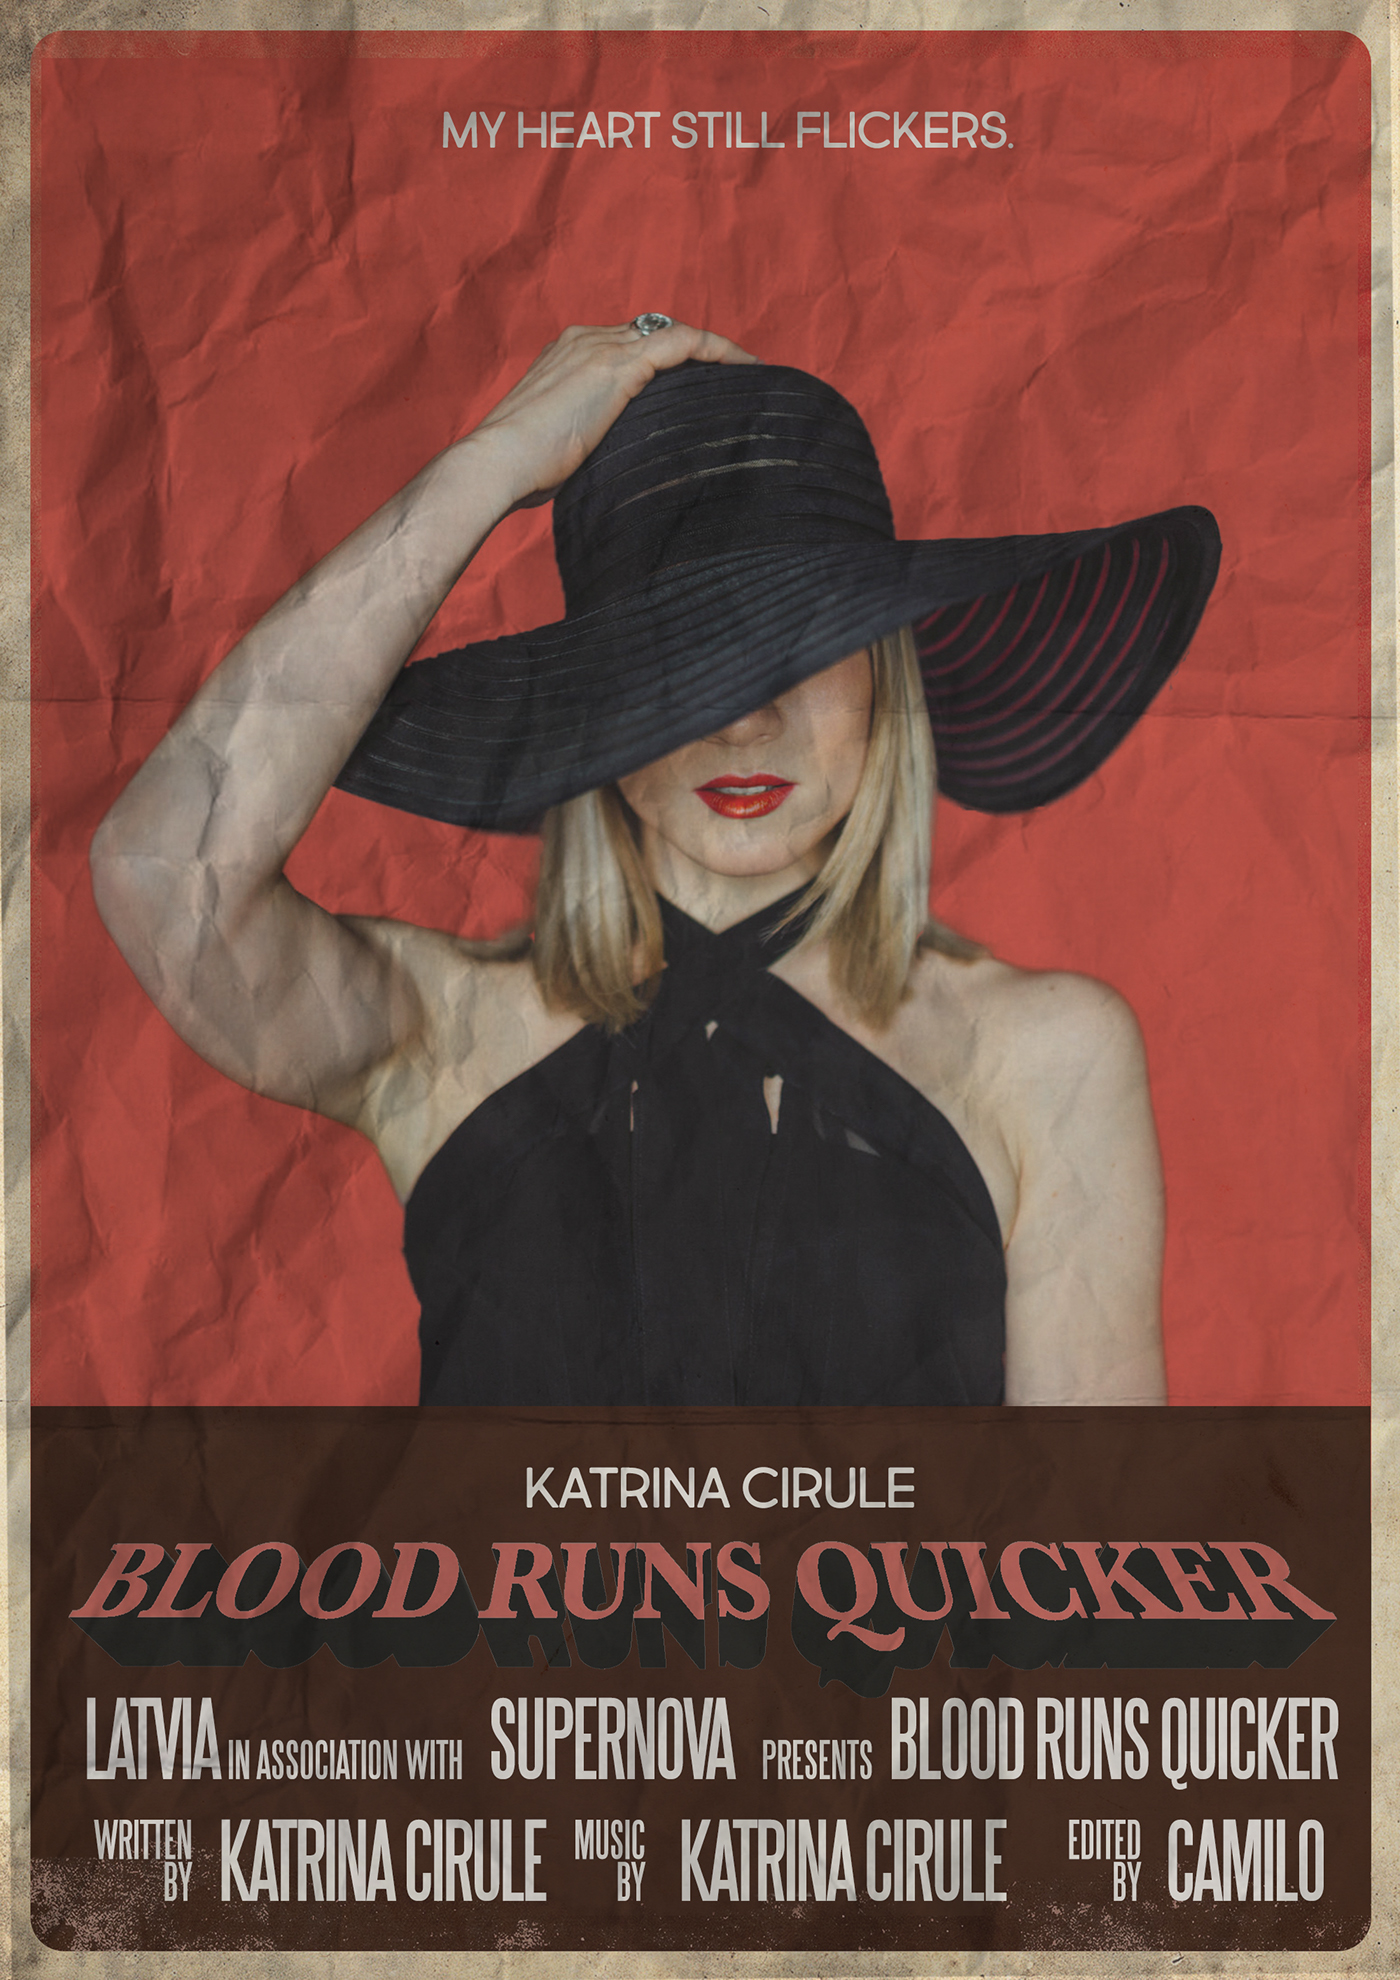 Katrina Cirule blood runs quicker retoque photoshop Cinema vintage Retro artwork music movie poster